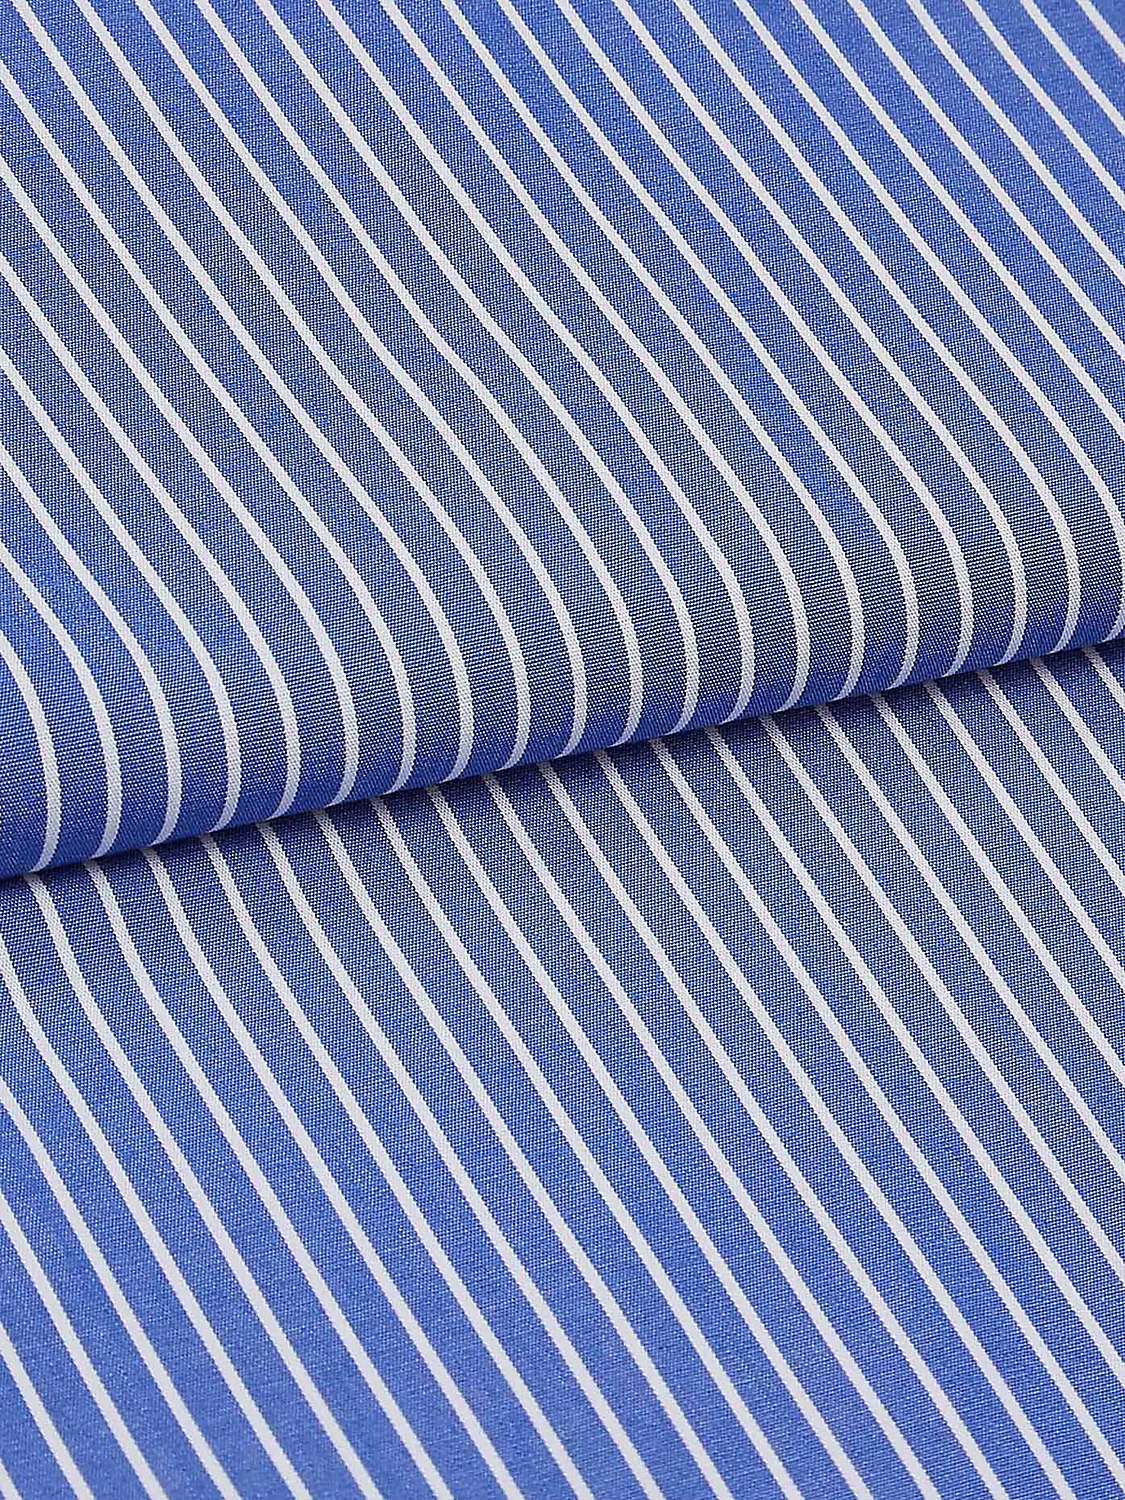 Buy British Boxers Stripe Crisp Cotton Nightshirt Online at johnlewis.com